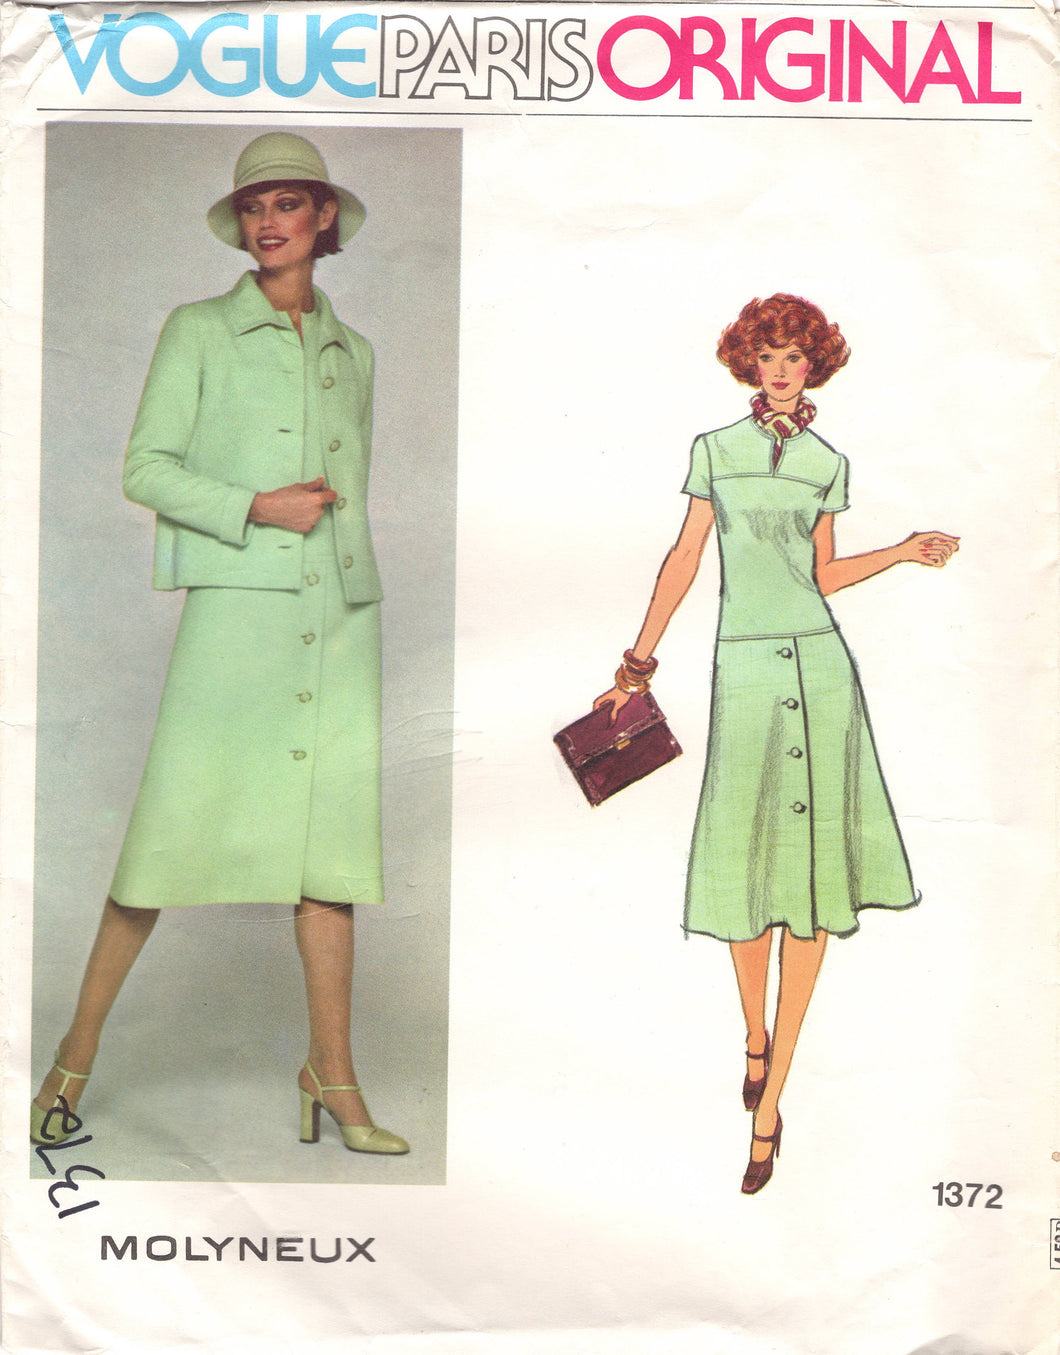 1970's Vogue Paris Original Drop-Waist Dress Pattern with Button detail skirt and Jacket Pattern - Molyneux - Bust 34